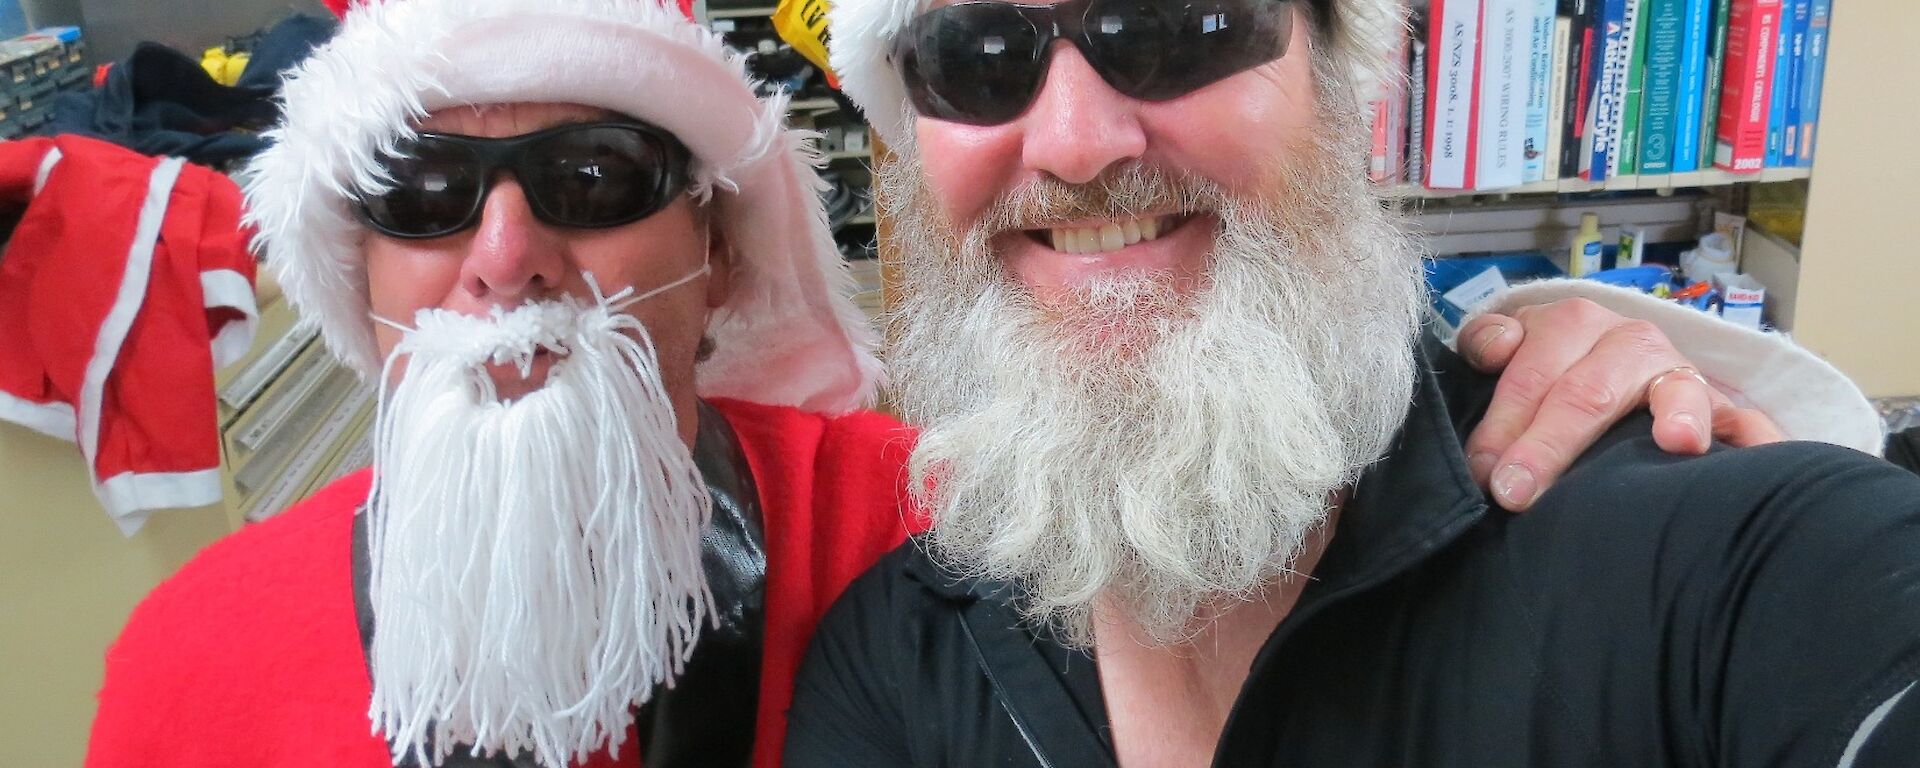 Two Santas: Santa Joe (left) and Santa Paul (right) — expeditioners dressed as fake Santas